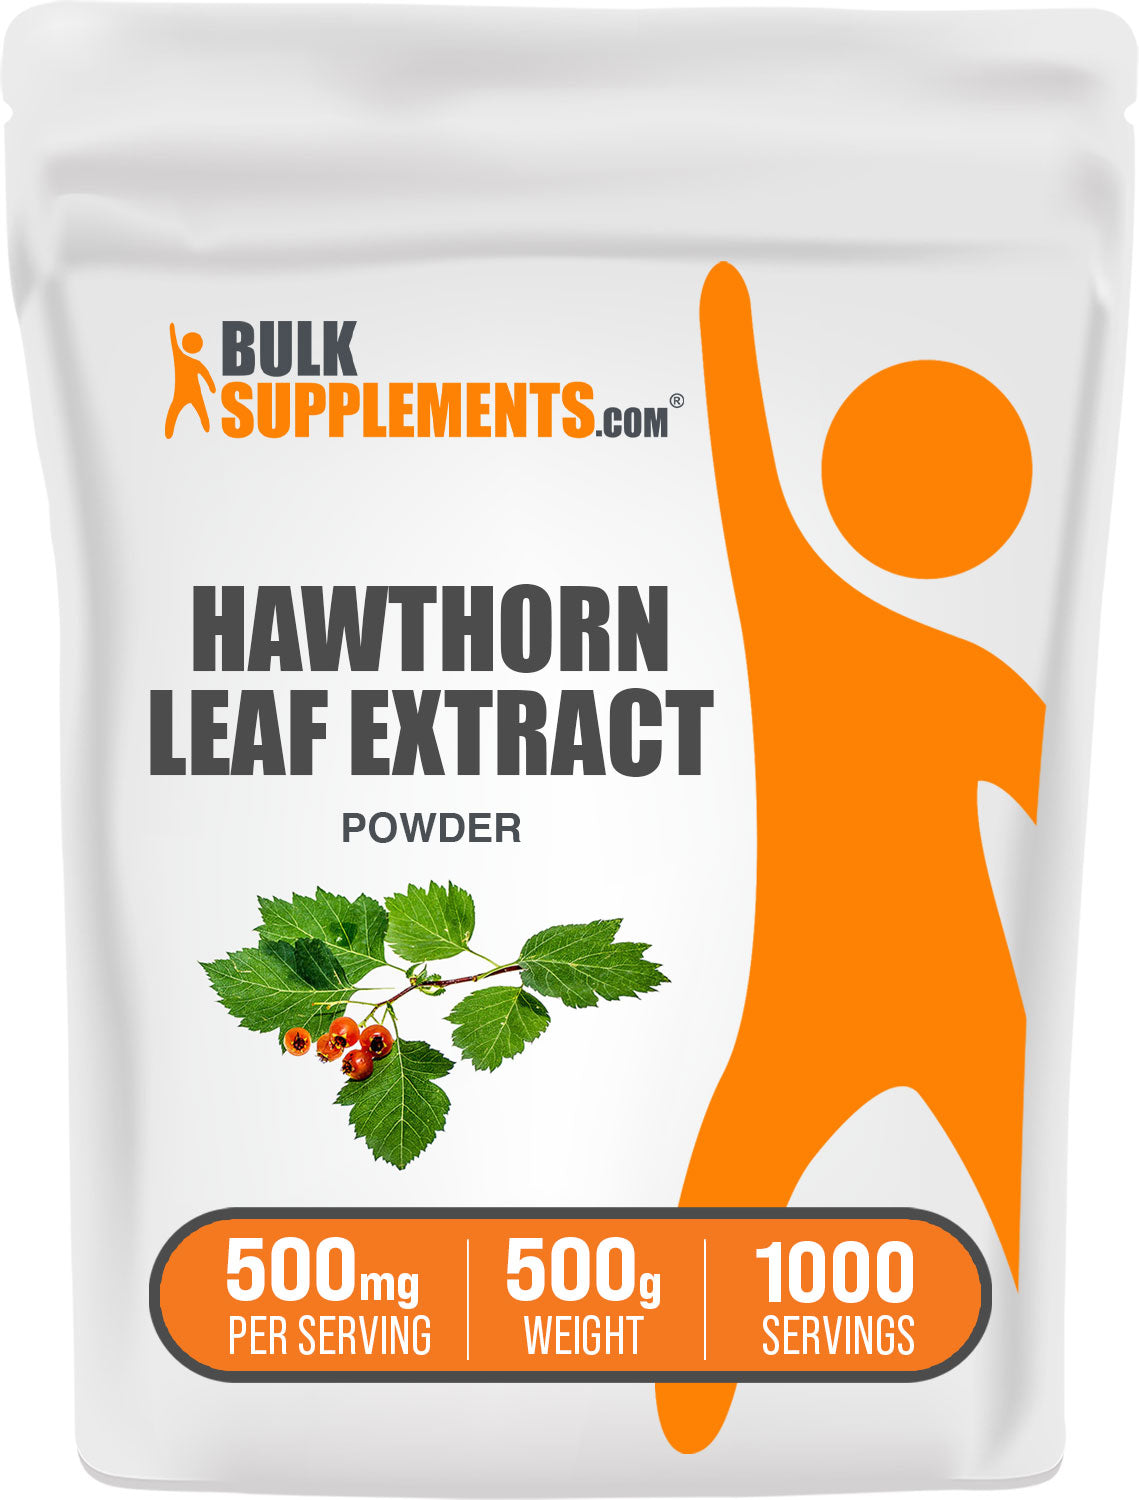 Hawthorn Leaf Extract 500g